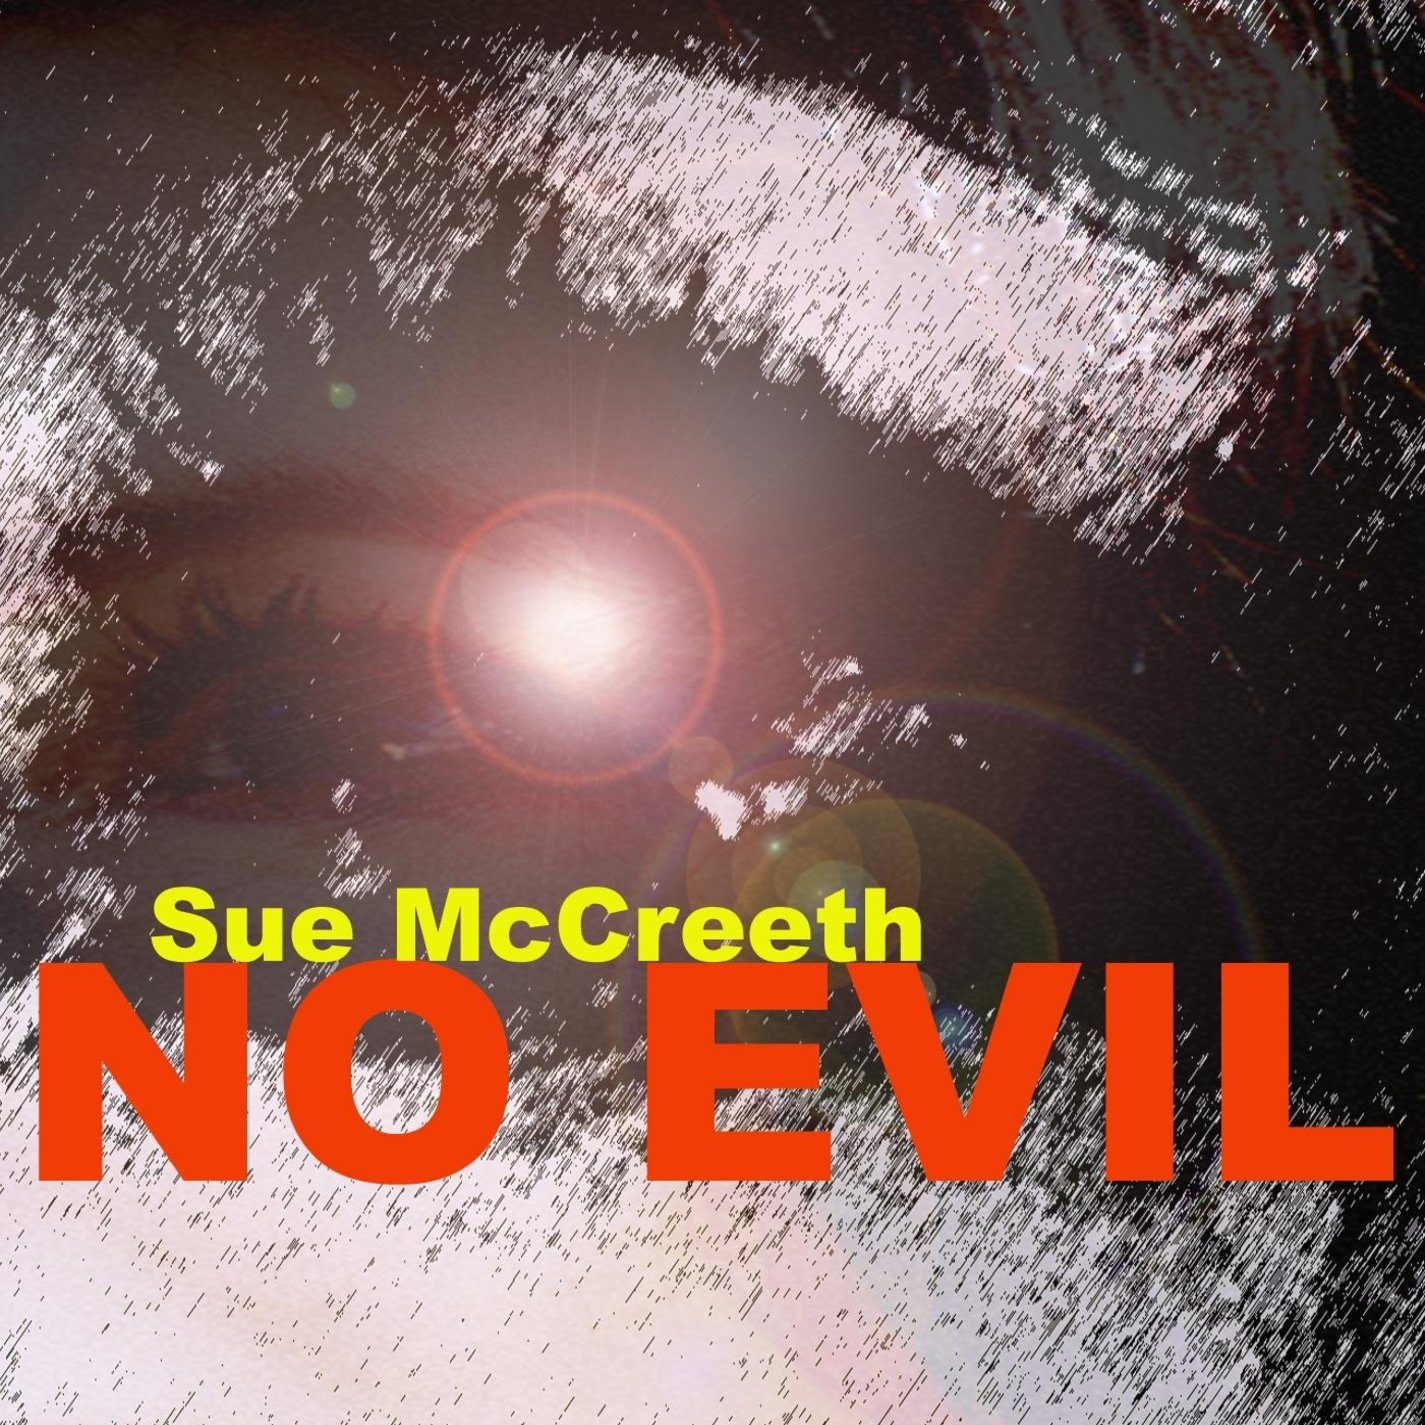 No Evil CD Front Cover - Sue McCreeth